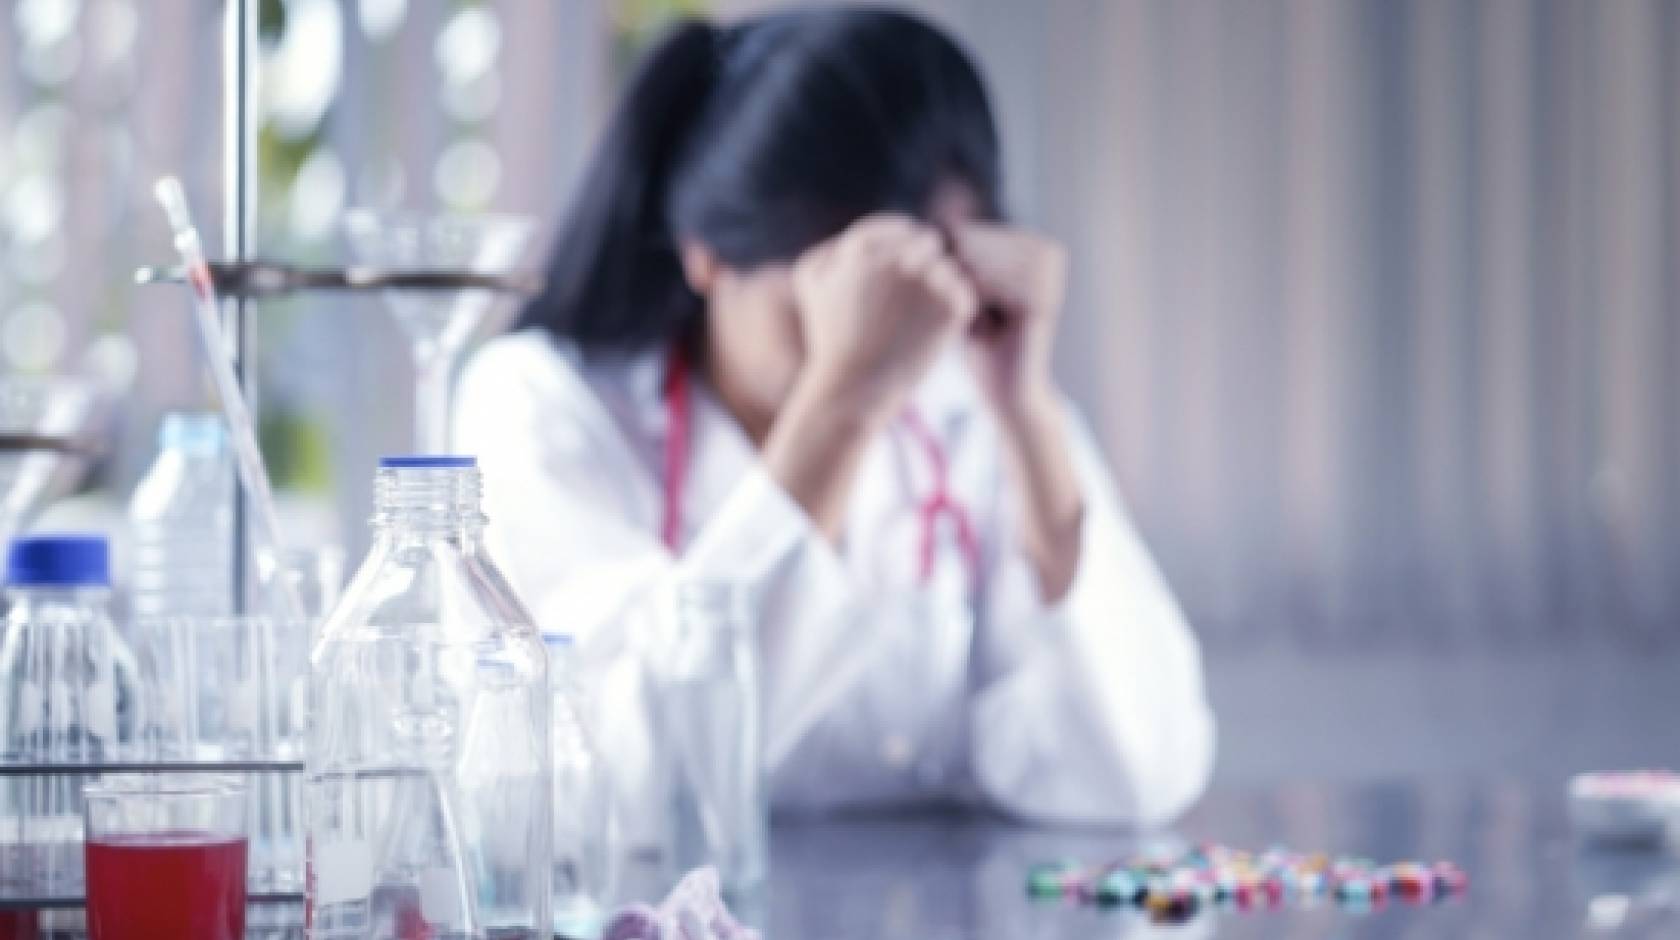 Woman in a lab coat, hangs her head down.